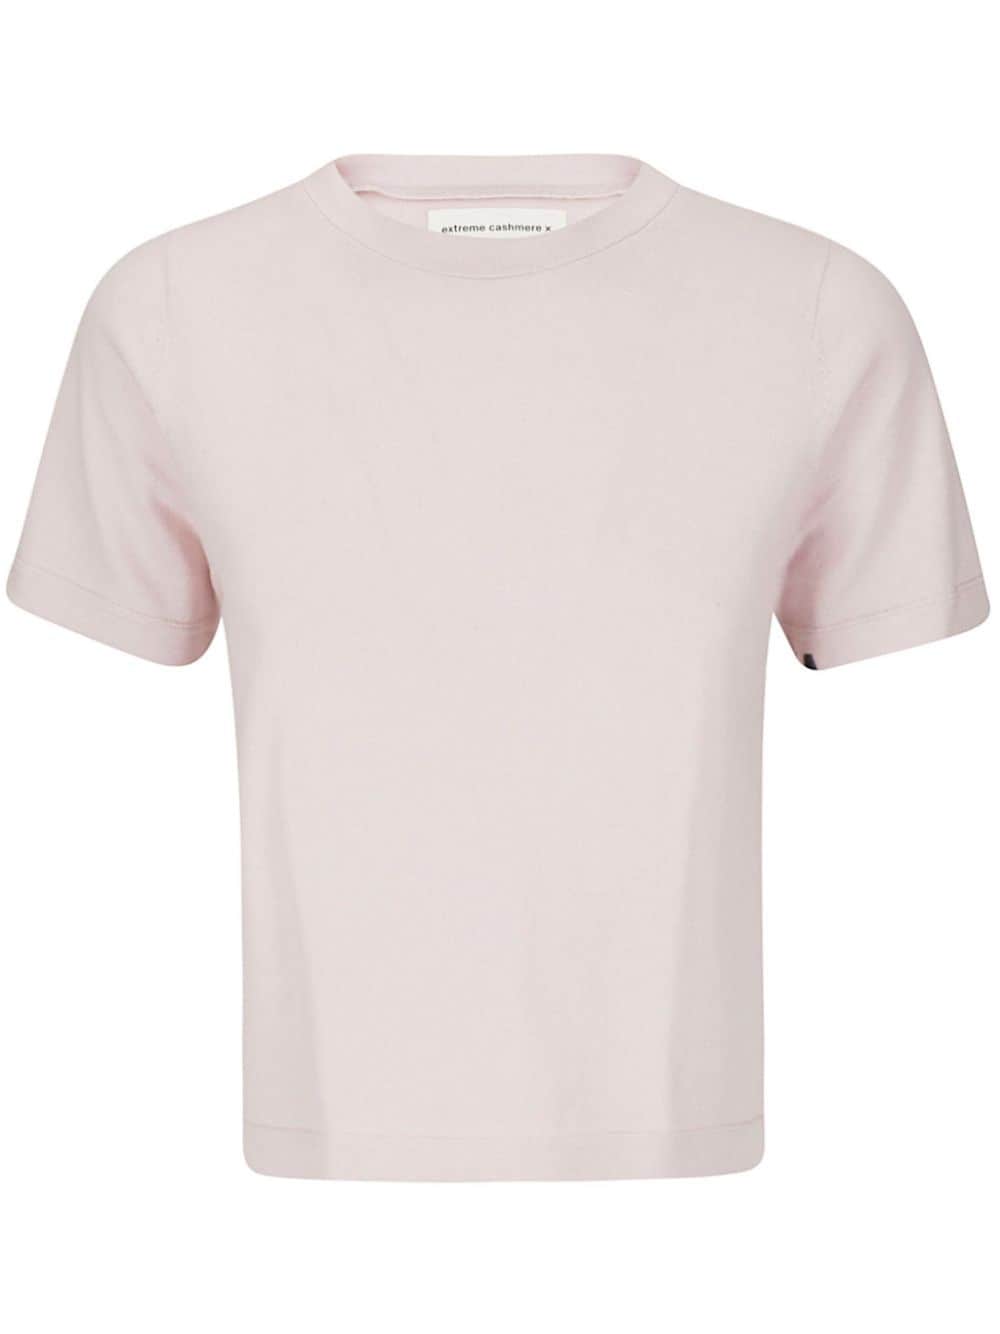 extreme cashmere Nº267 Tina T-shirt - Neutrals von extreme cashmere